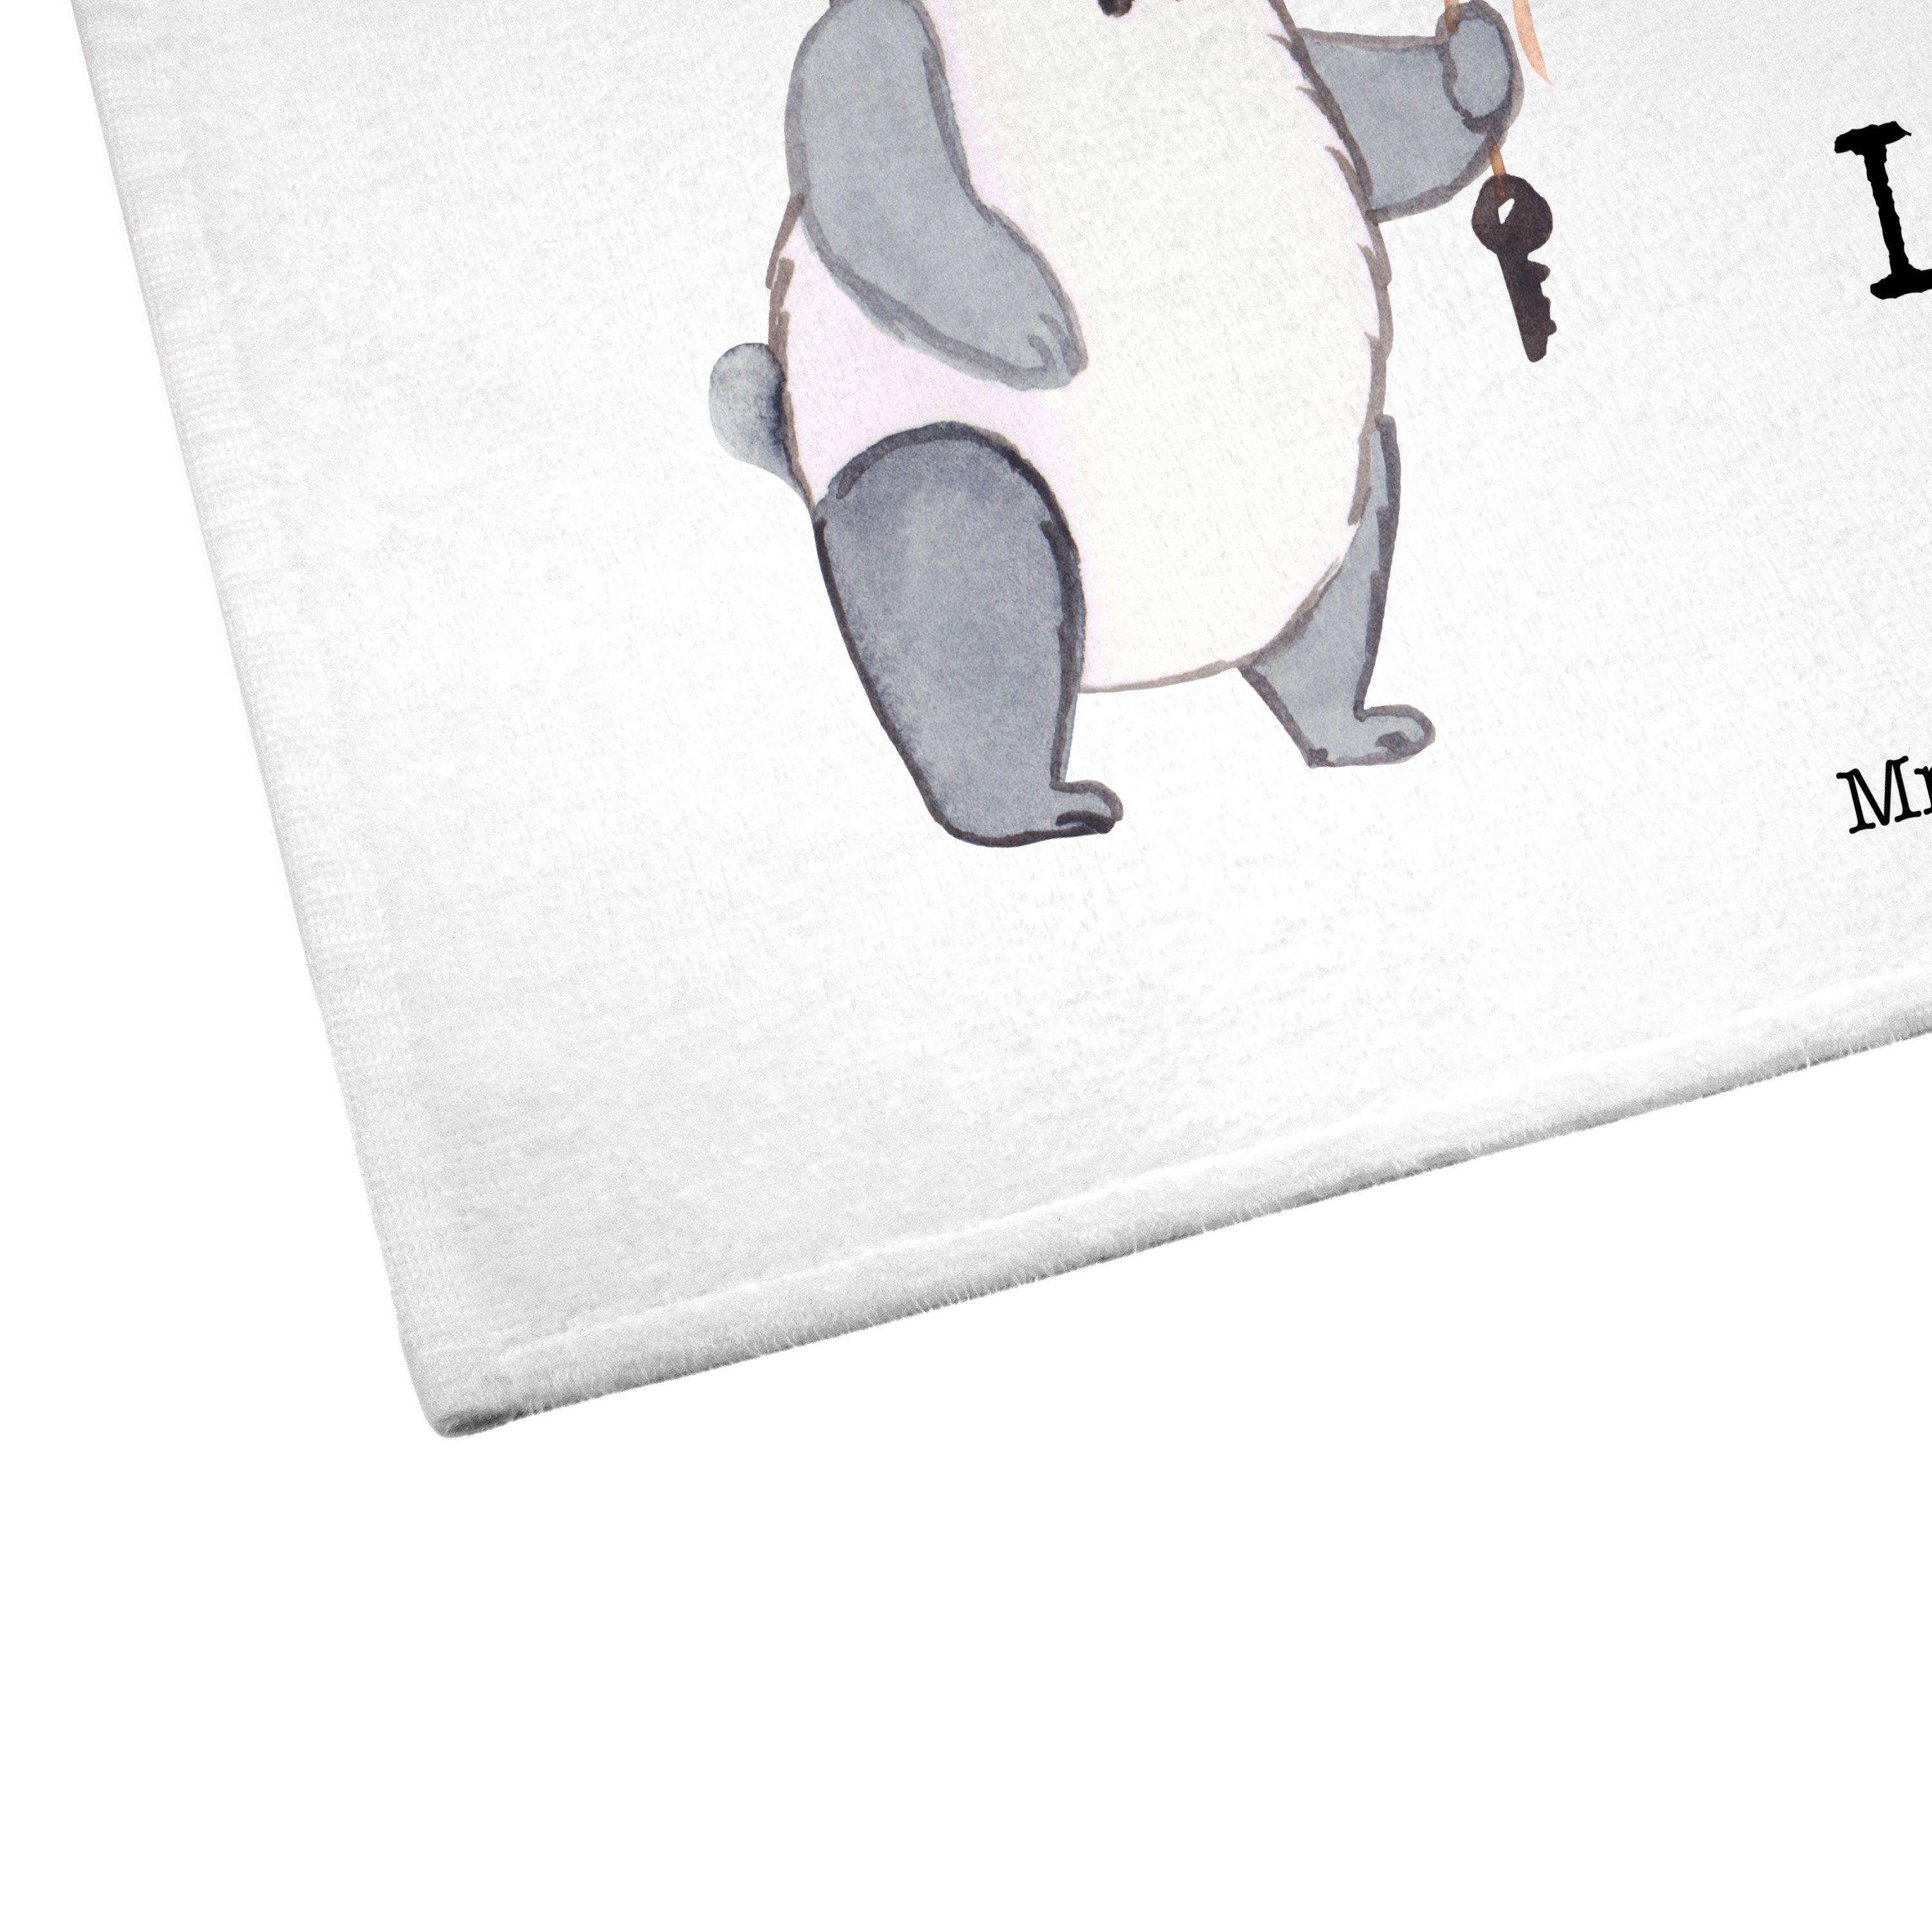 & Mr. (1-St) Handtuc, aus Sport Handtuch - - Mrs. Geschenk, Jubiläum, Weiß Vermieter Panda Leidenschaft